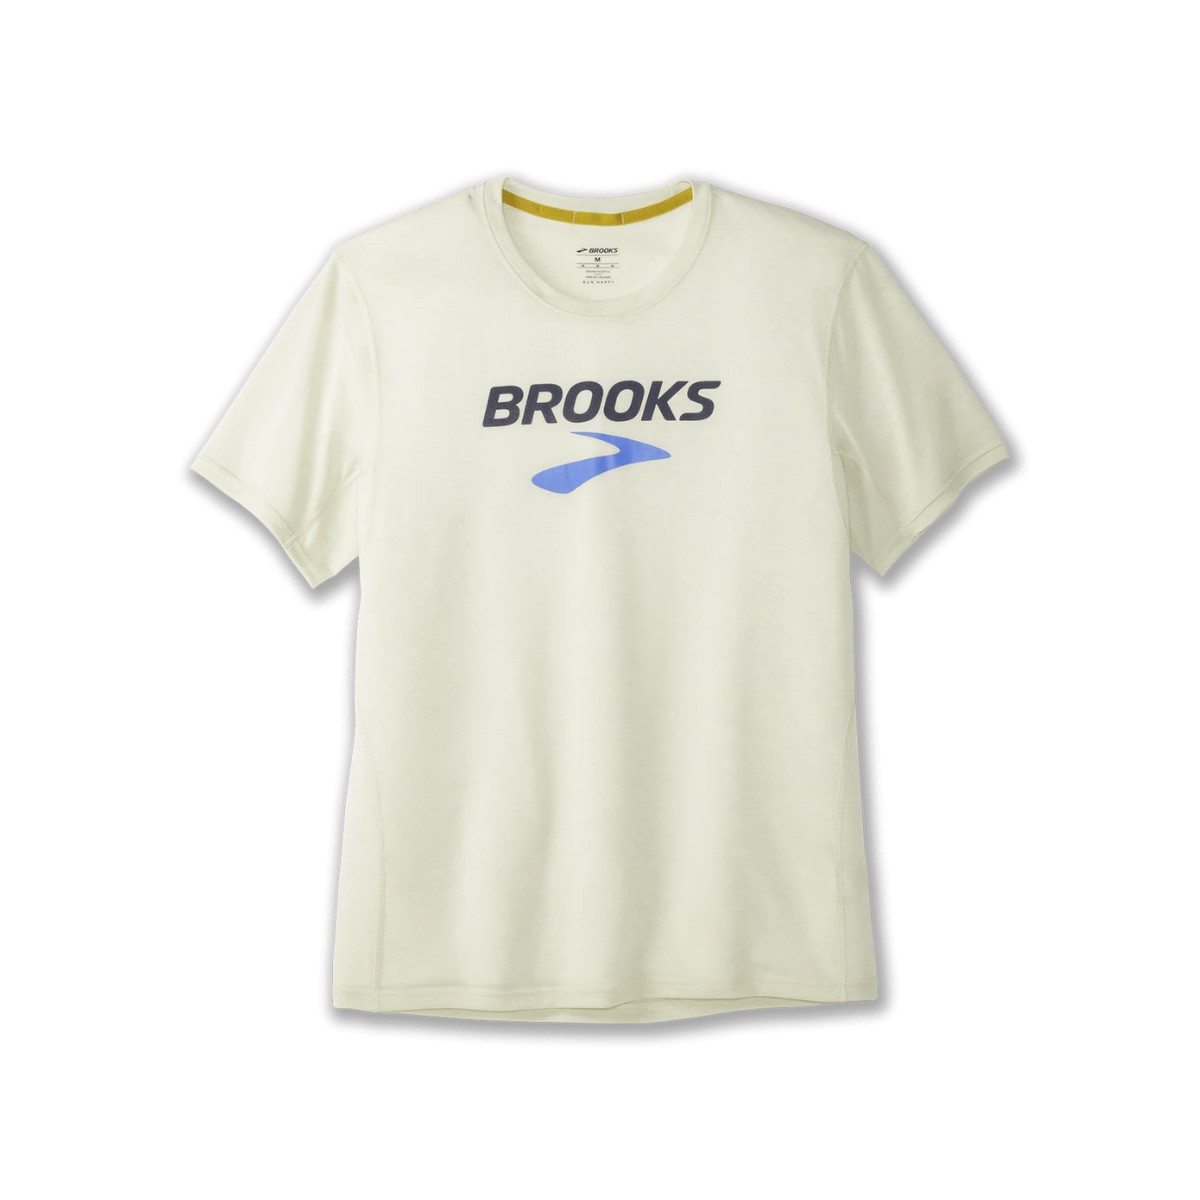 Camiseta Brooks Distance Manga Corta Blanco Roto, Talla XS